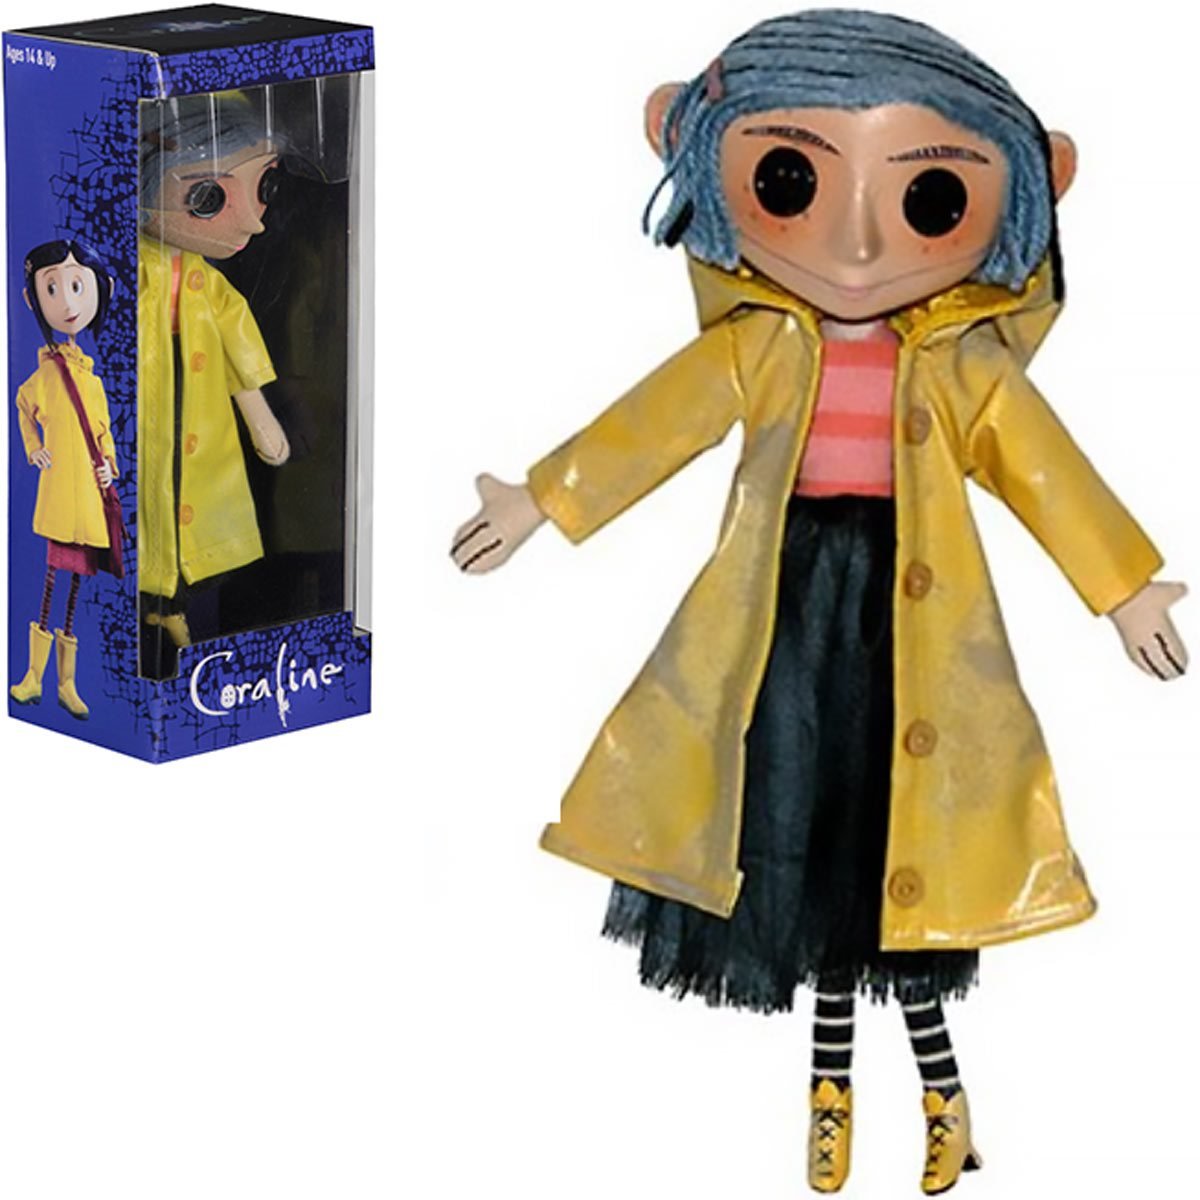 NECA Coraline 10" Prop Replica Doll for sale online 49501 